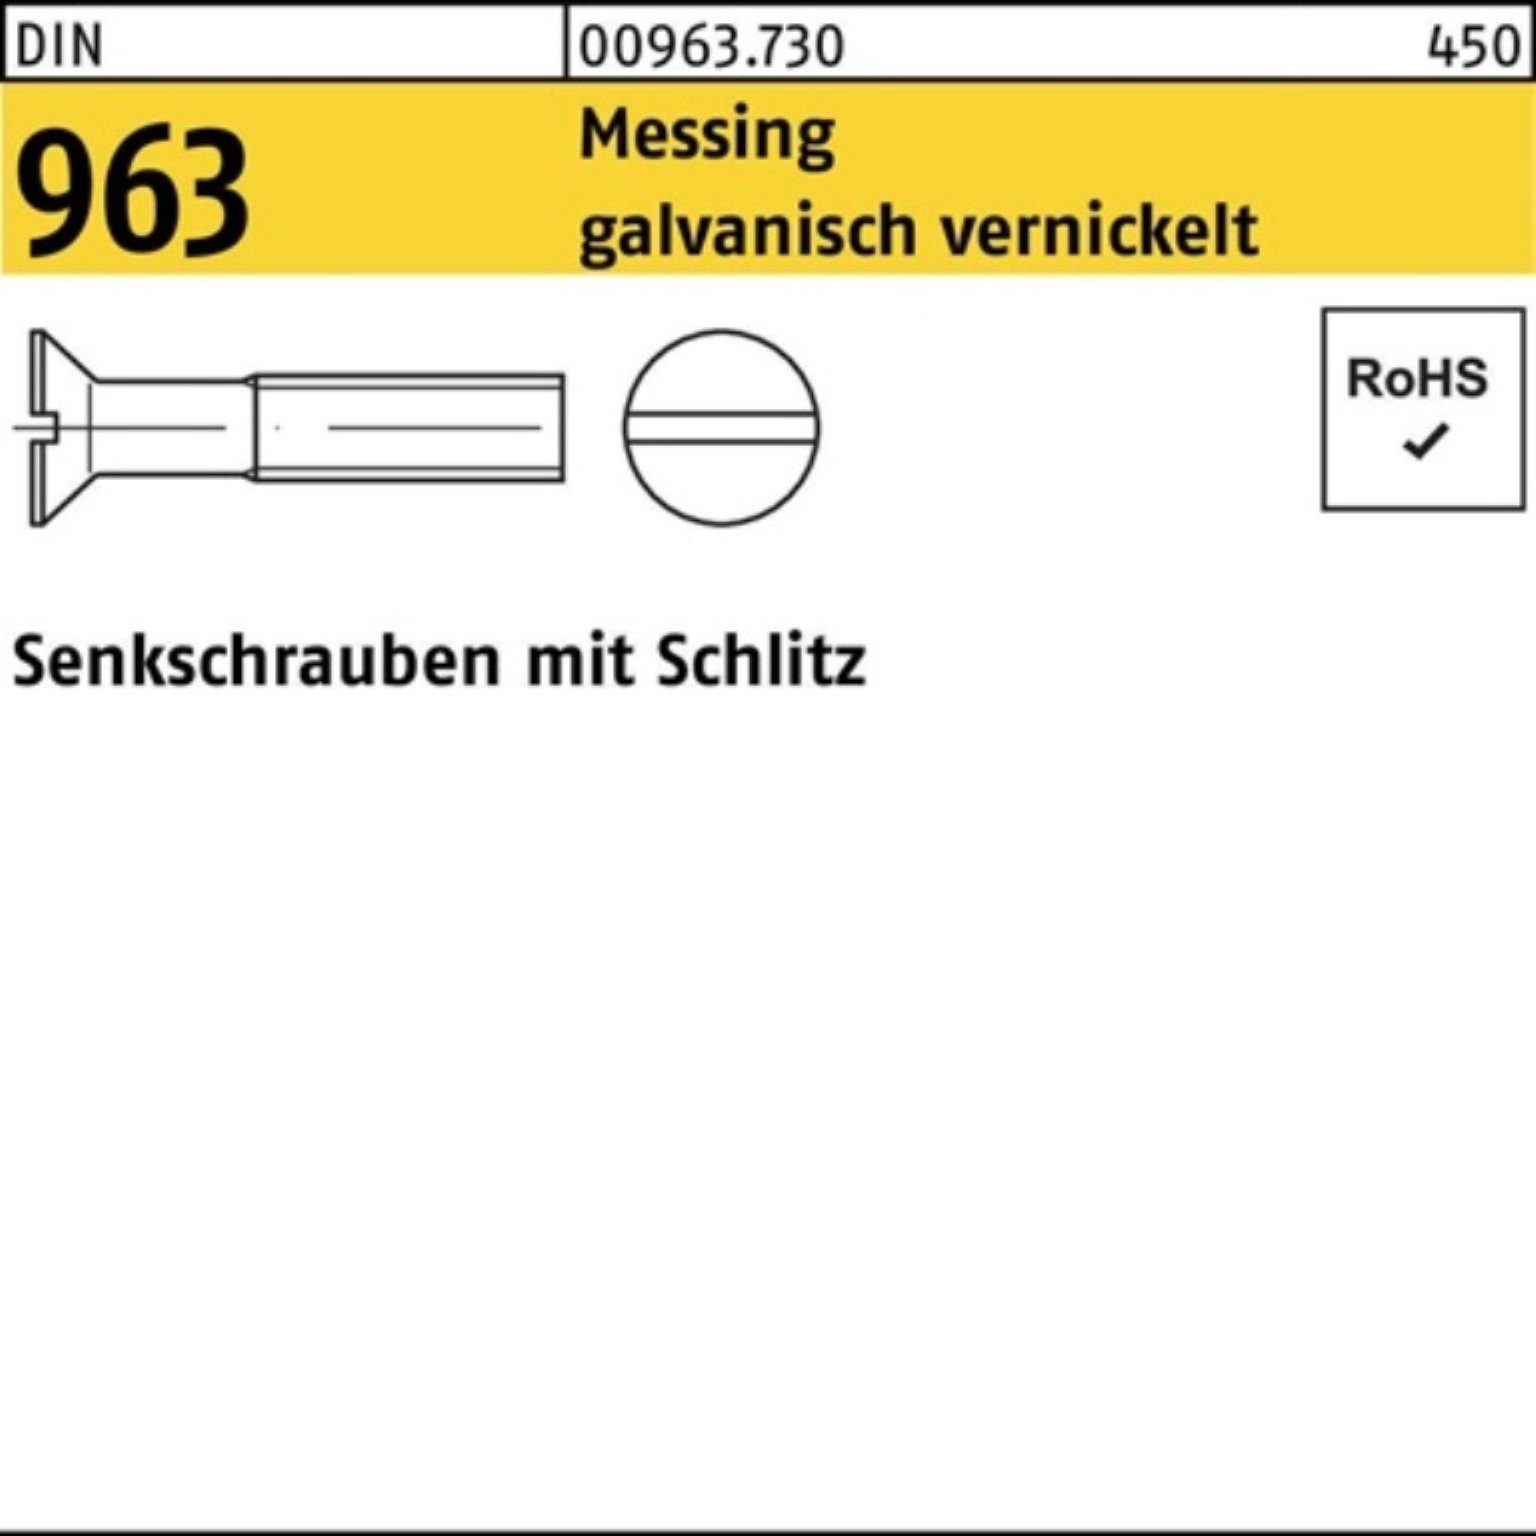 Reyher Senkschraube Pack DIN M3x Schlitz Messing galv. 20 200er 963 Senkschraube vernickel